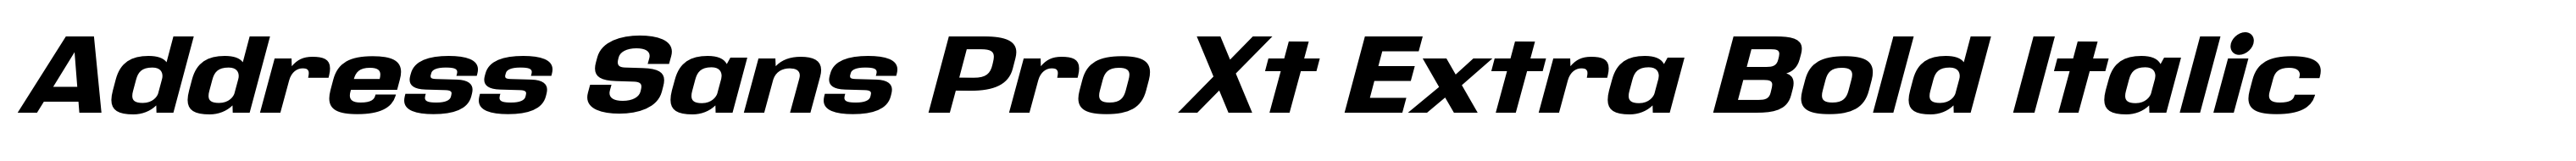 Address Sans Pro Xt Extra Bold Italic